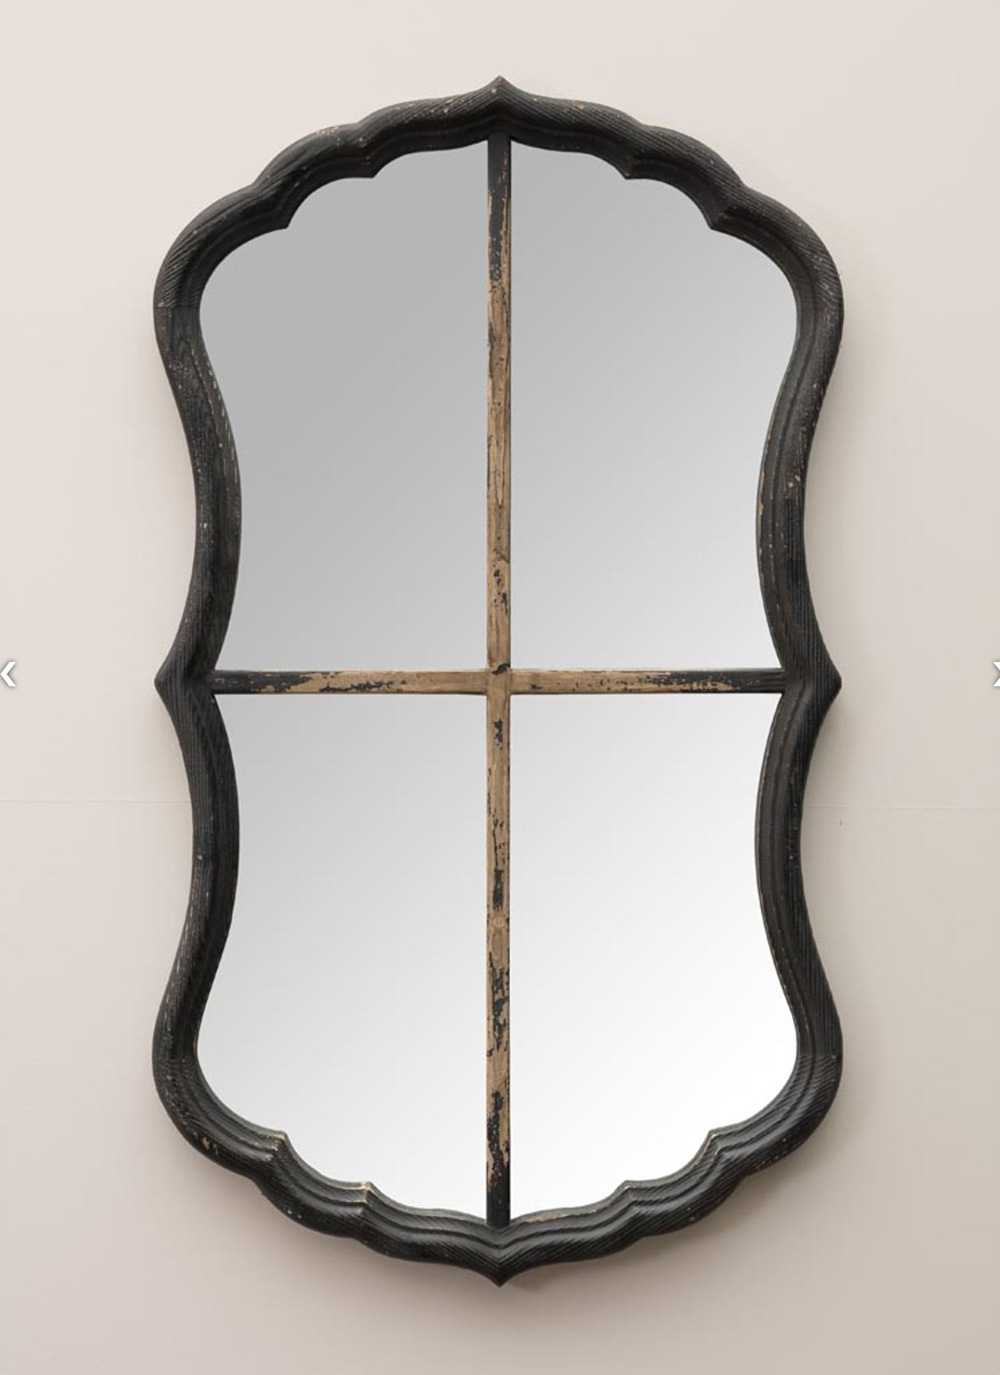 Black patina mirror